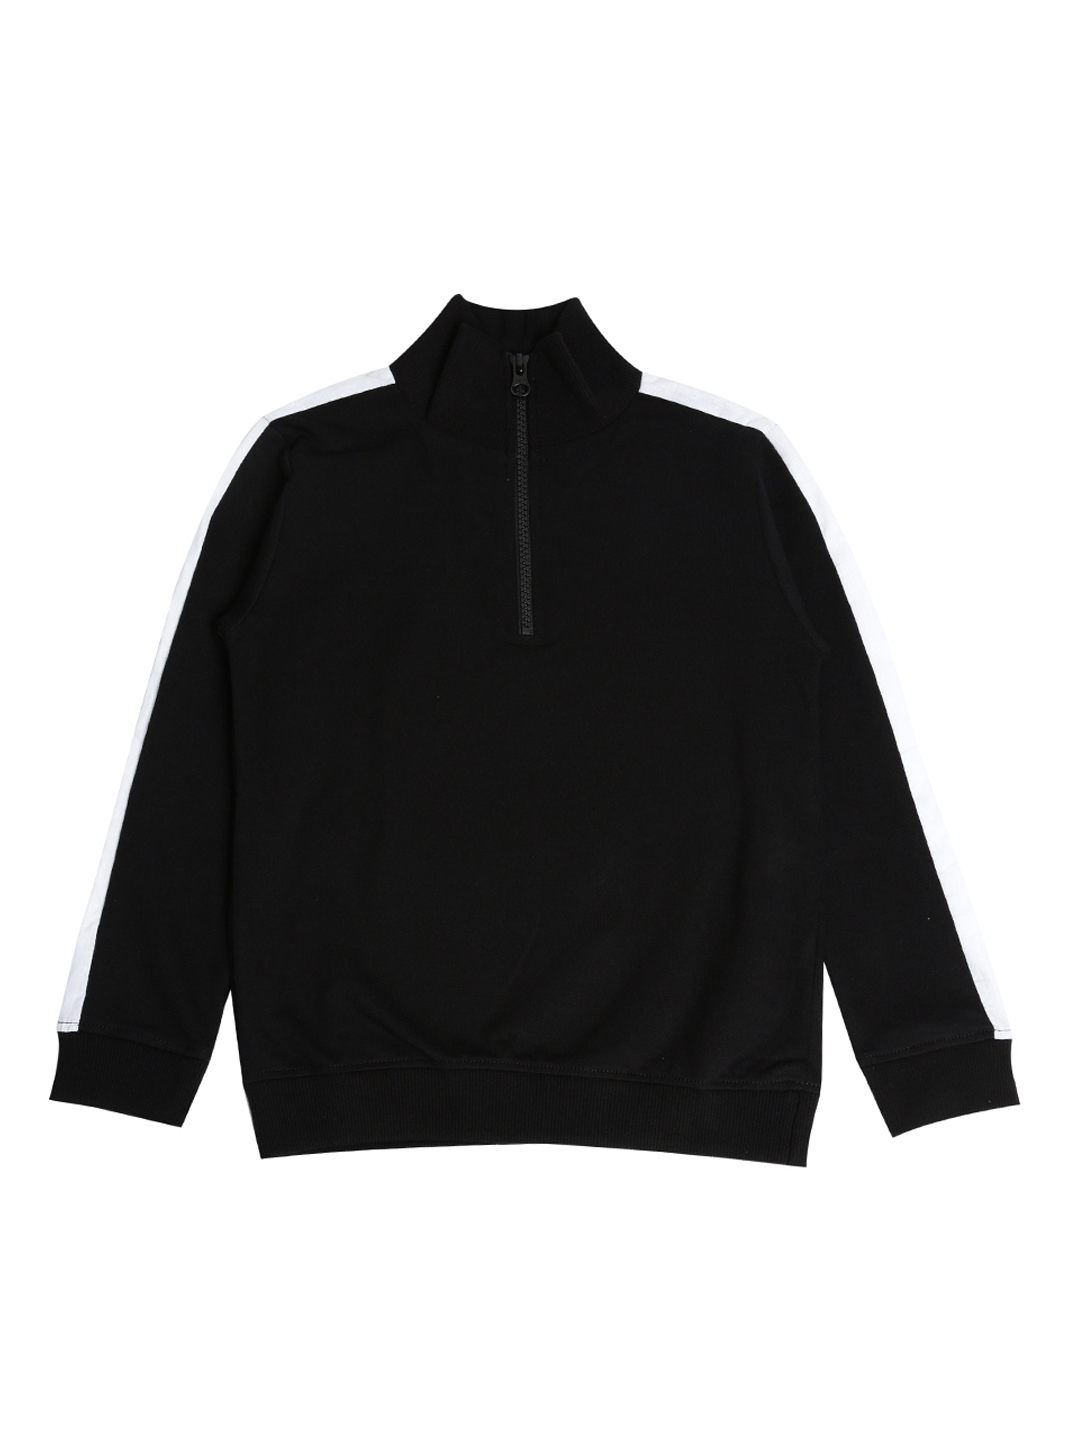 Buy AUDAZ Boys Black Solid Sweatshirt - Sweatshirts for Boys 11214484 ...